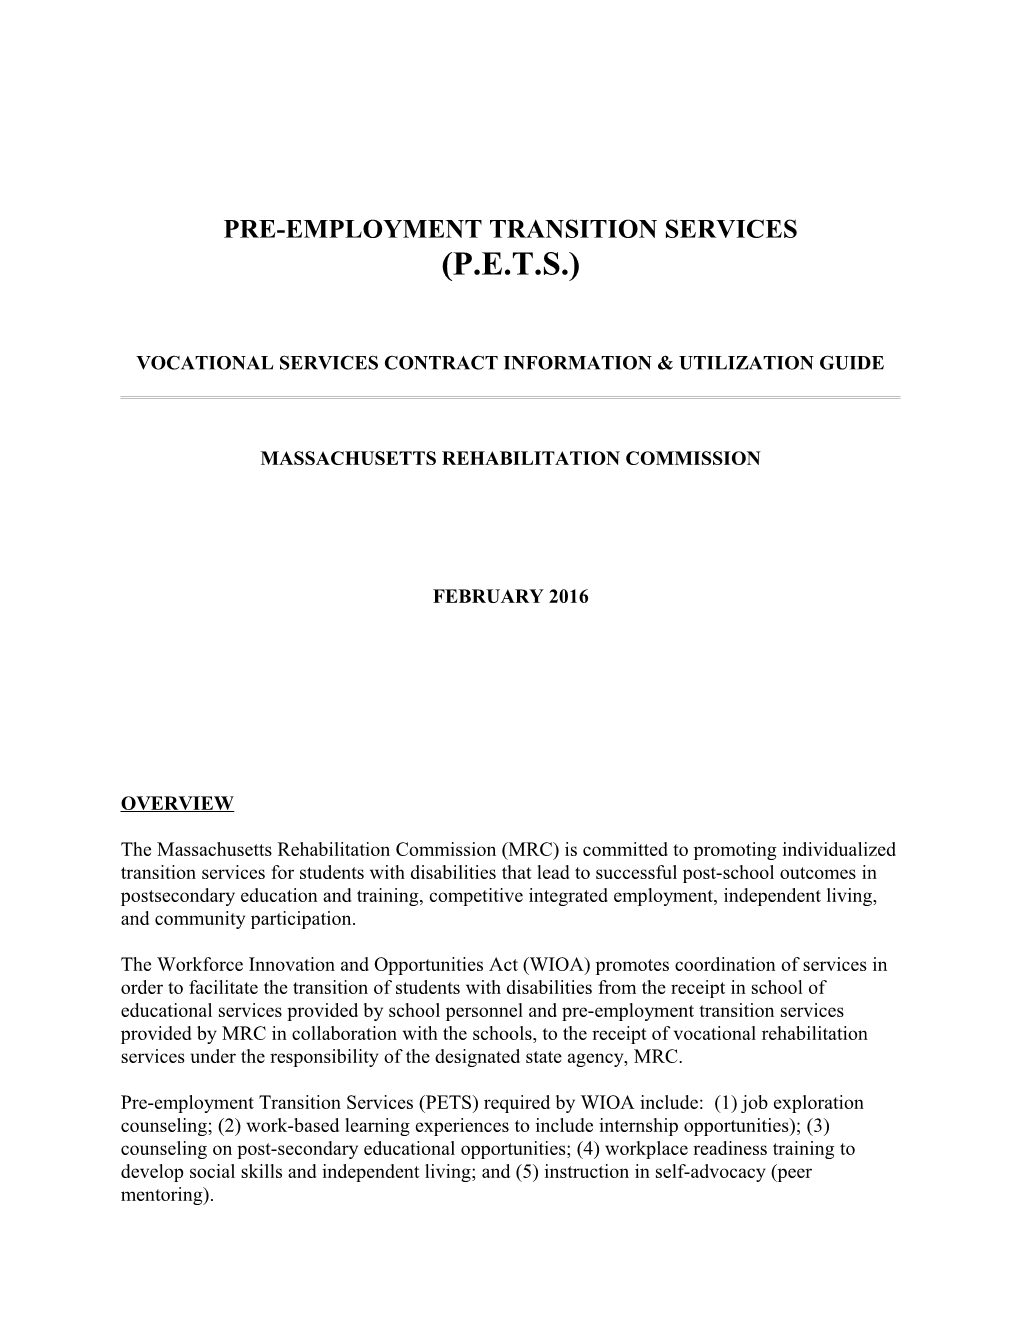 Pre-Employment Transition Services